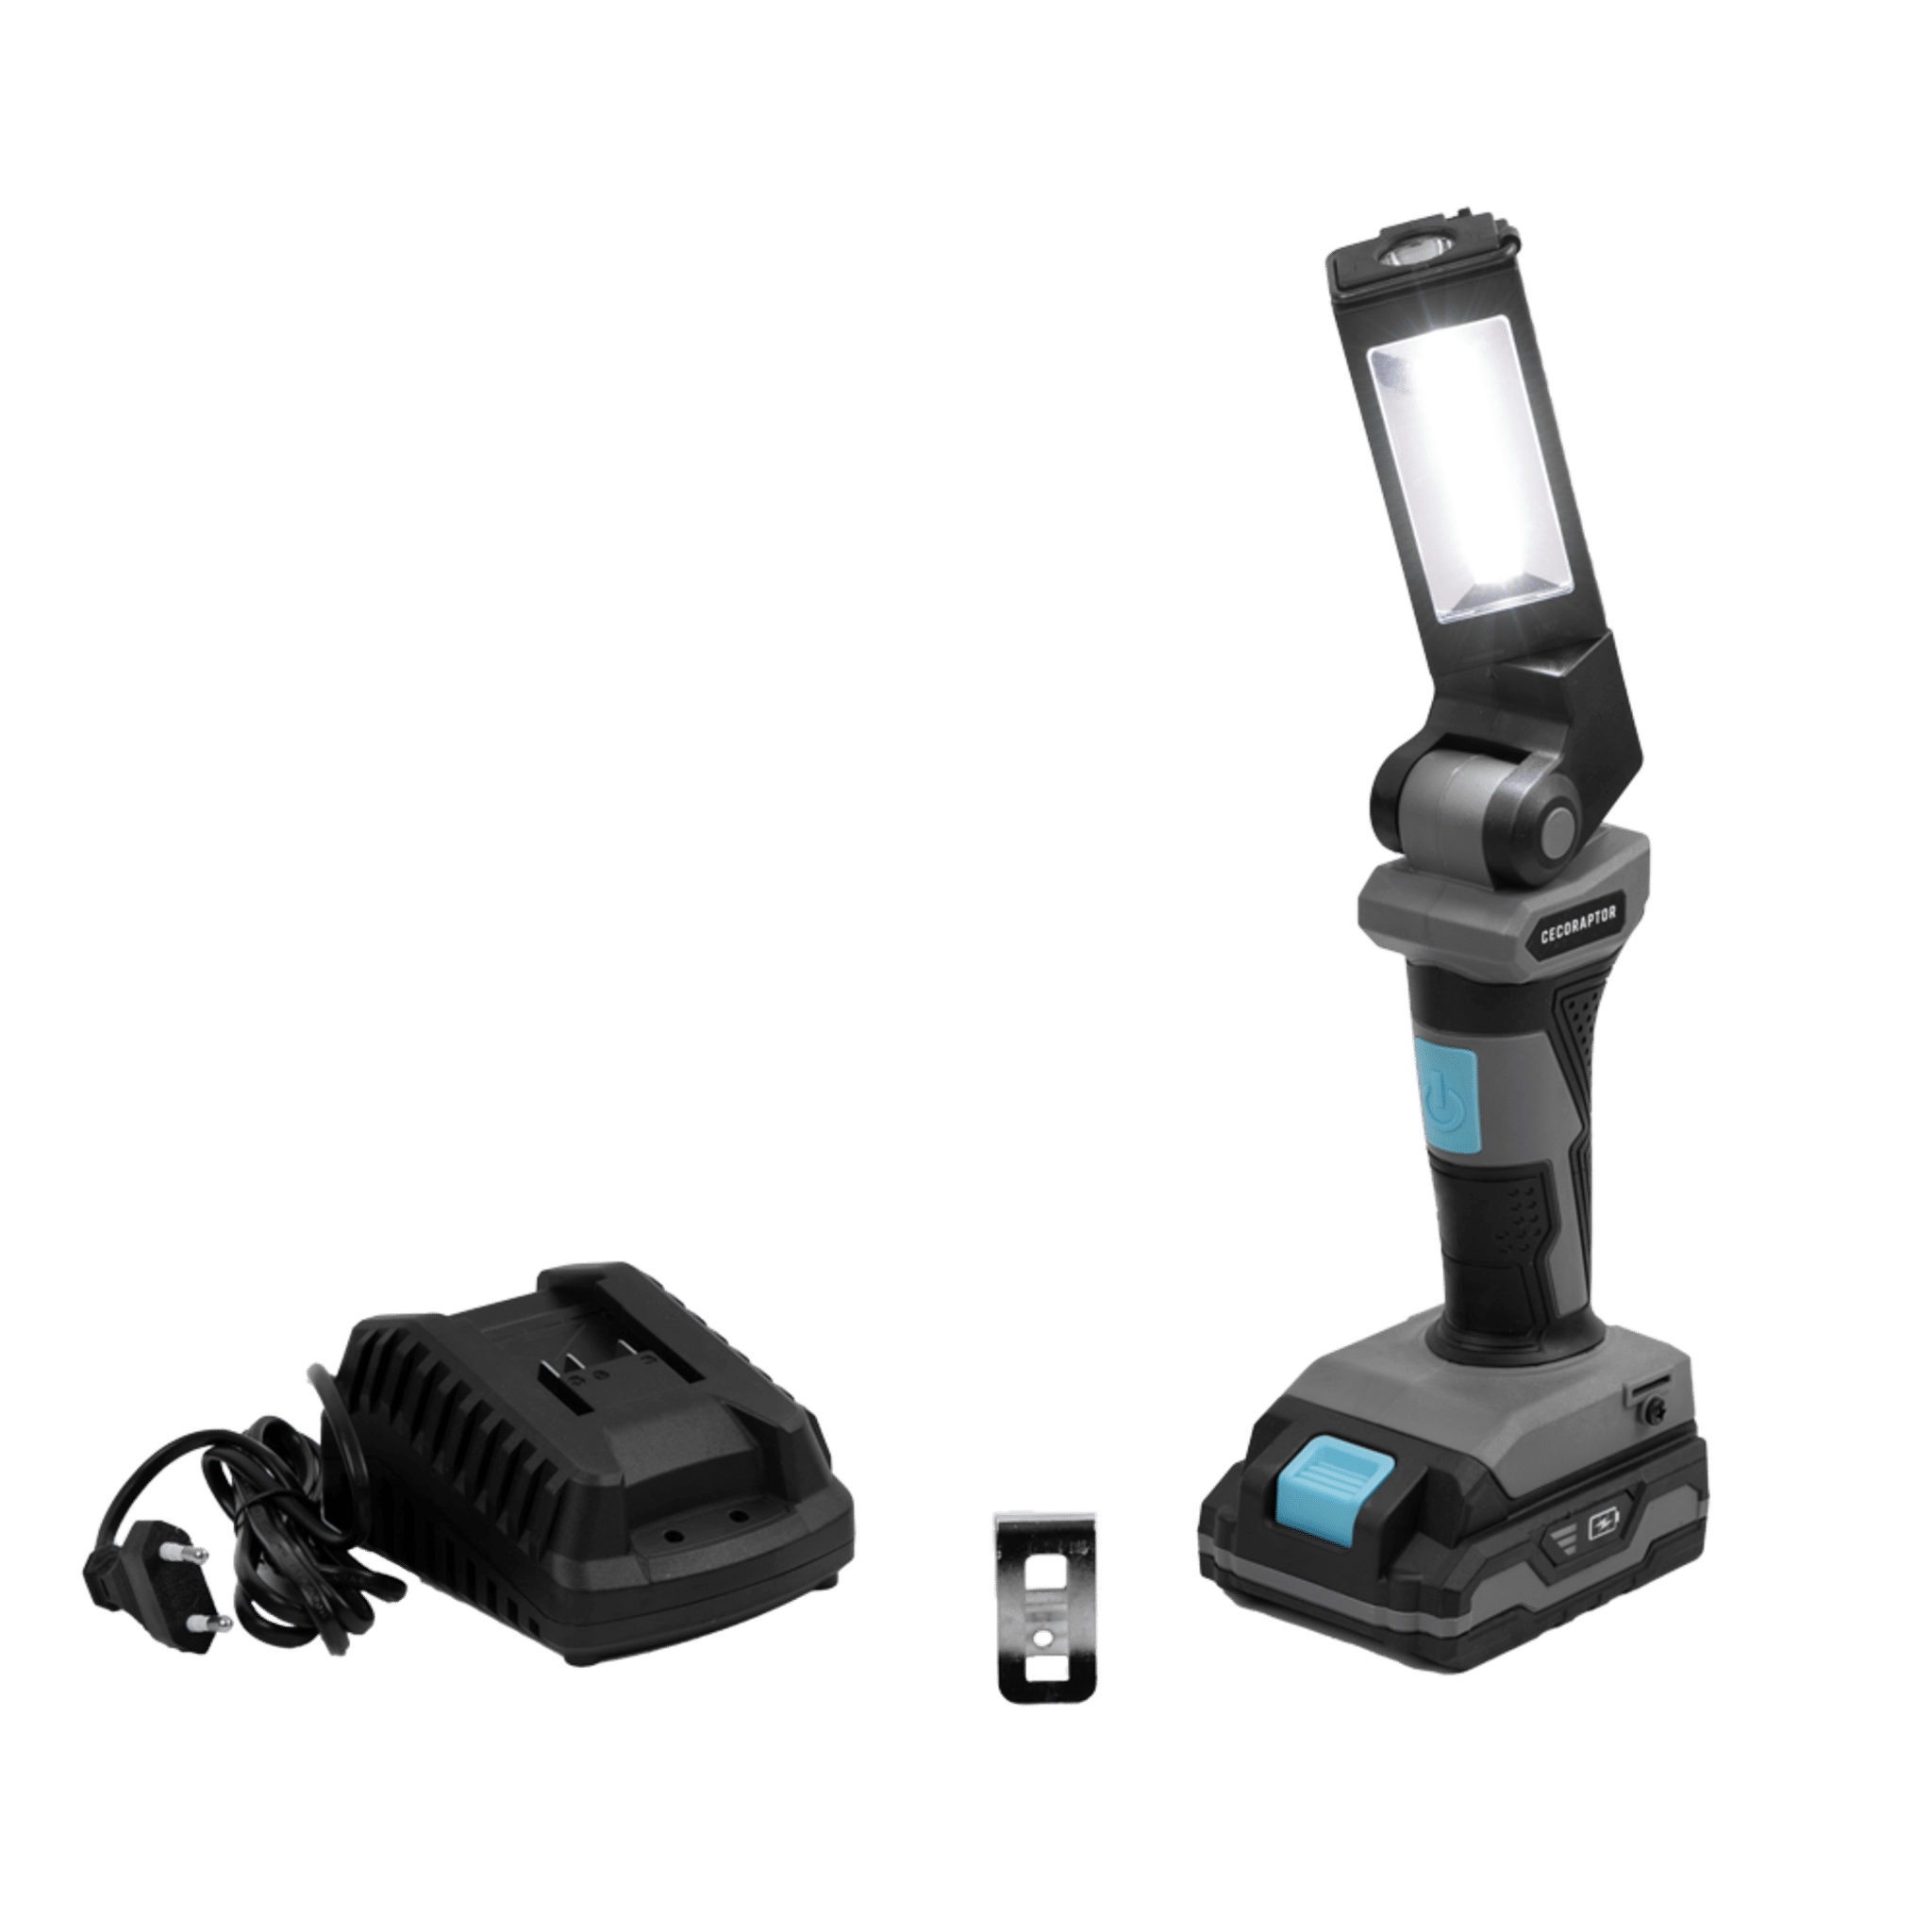 Luz de Trabajo sin Cables CecoRaptor WorkLight 2020 Advance. 20 V y 2000 mAh, 5 W, Frontal 300lm + Lateral 250lm